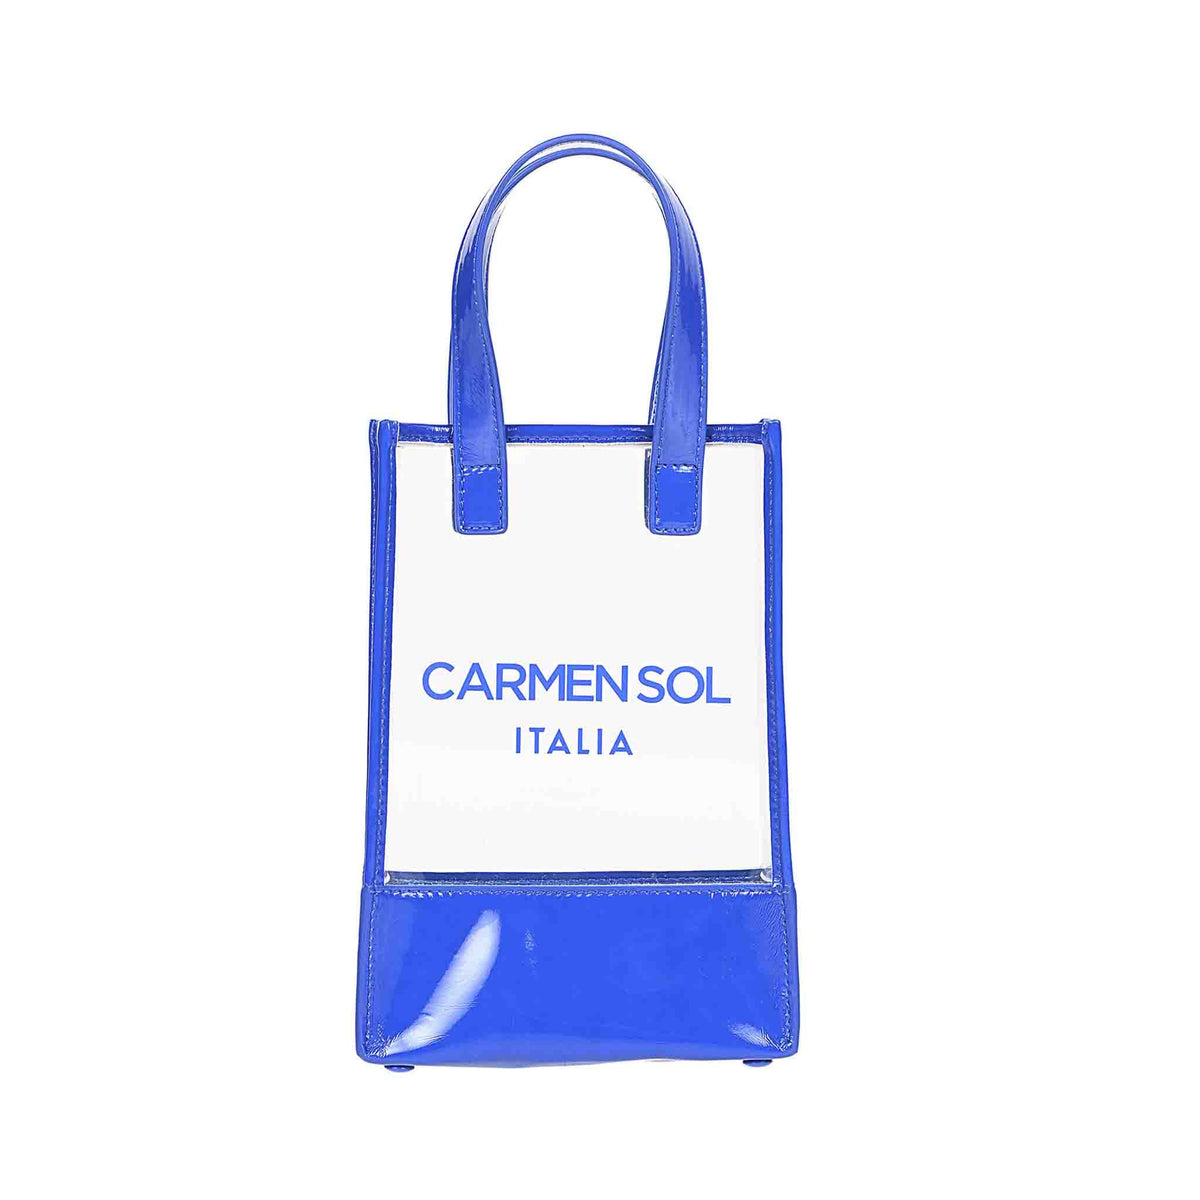 Beach crossbody mini bag in blue color. Perfect stylish waterproof mini crossbody clear bag from carmen sol.